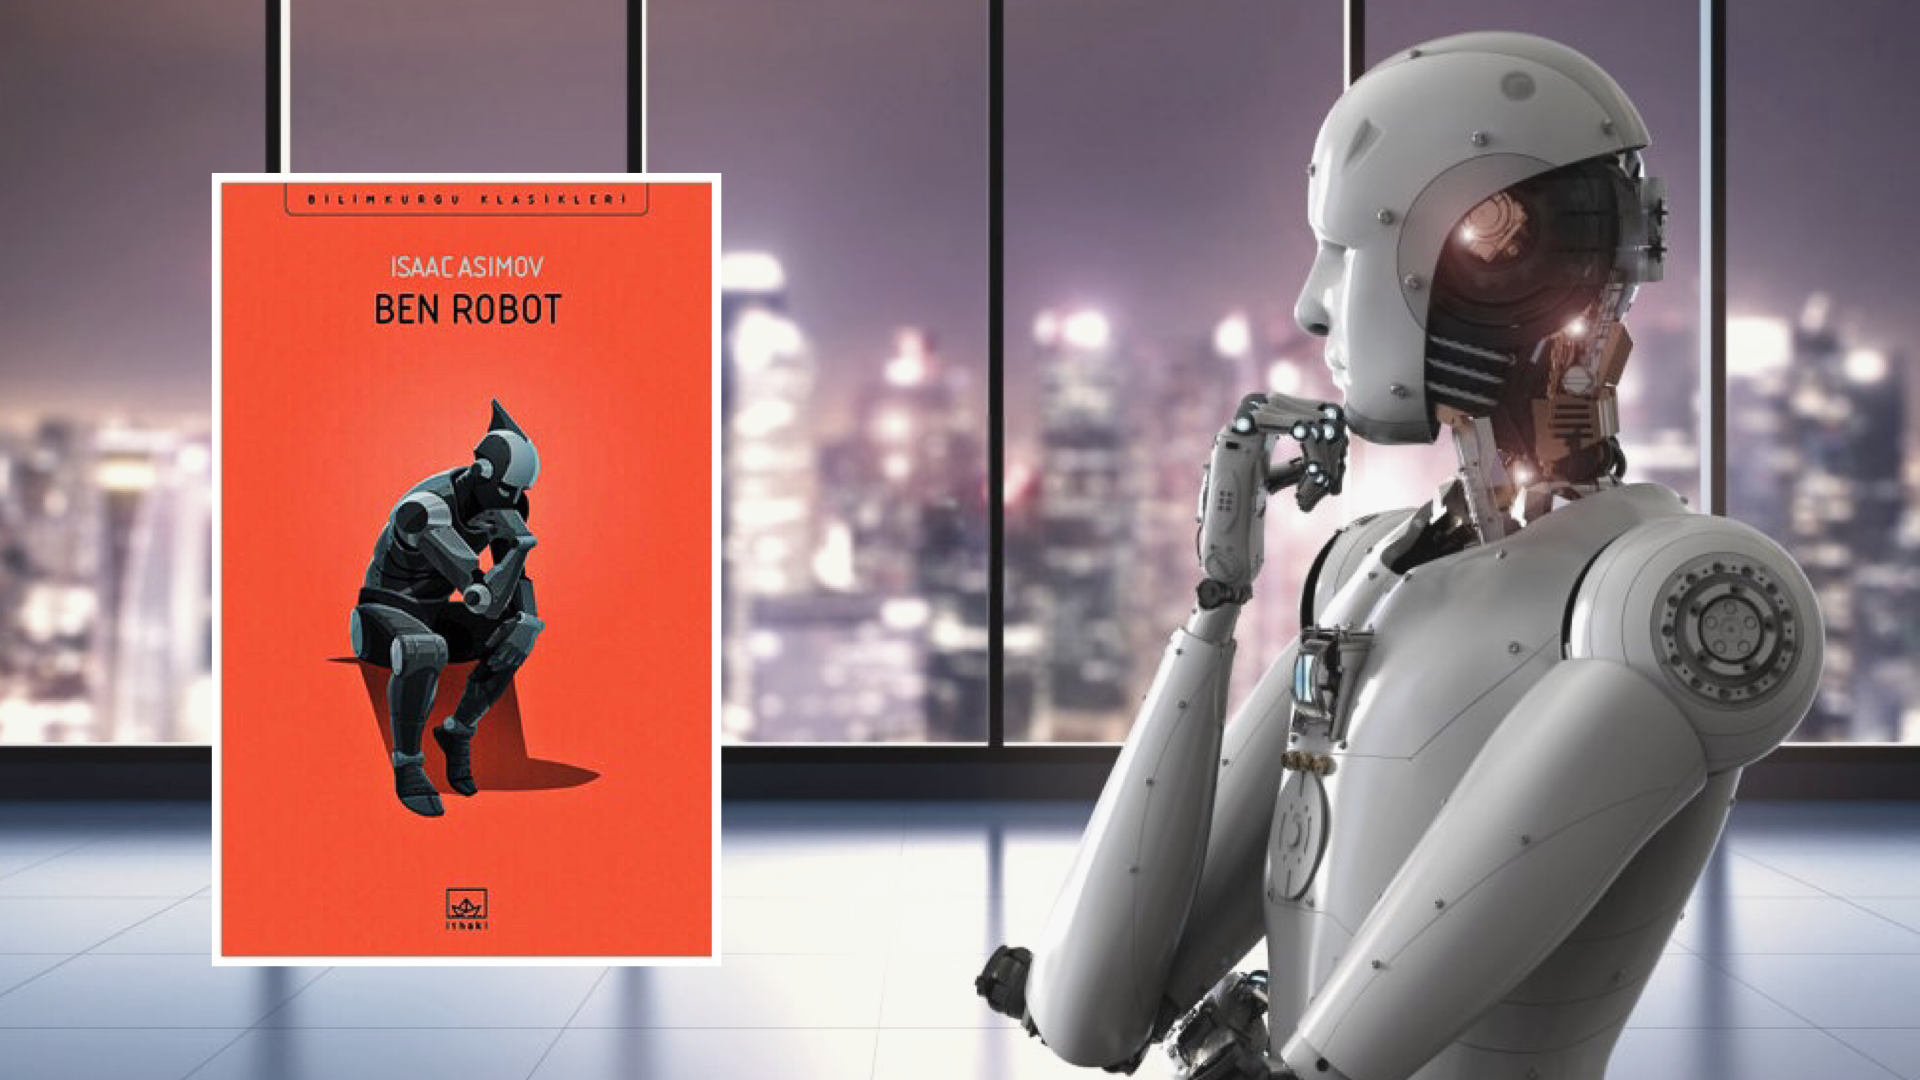 Kitap: Ben Robot | Yazar: Isaac Asimov | Yorumlayan: Hülya Erarslan